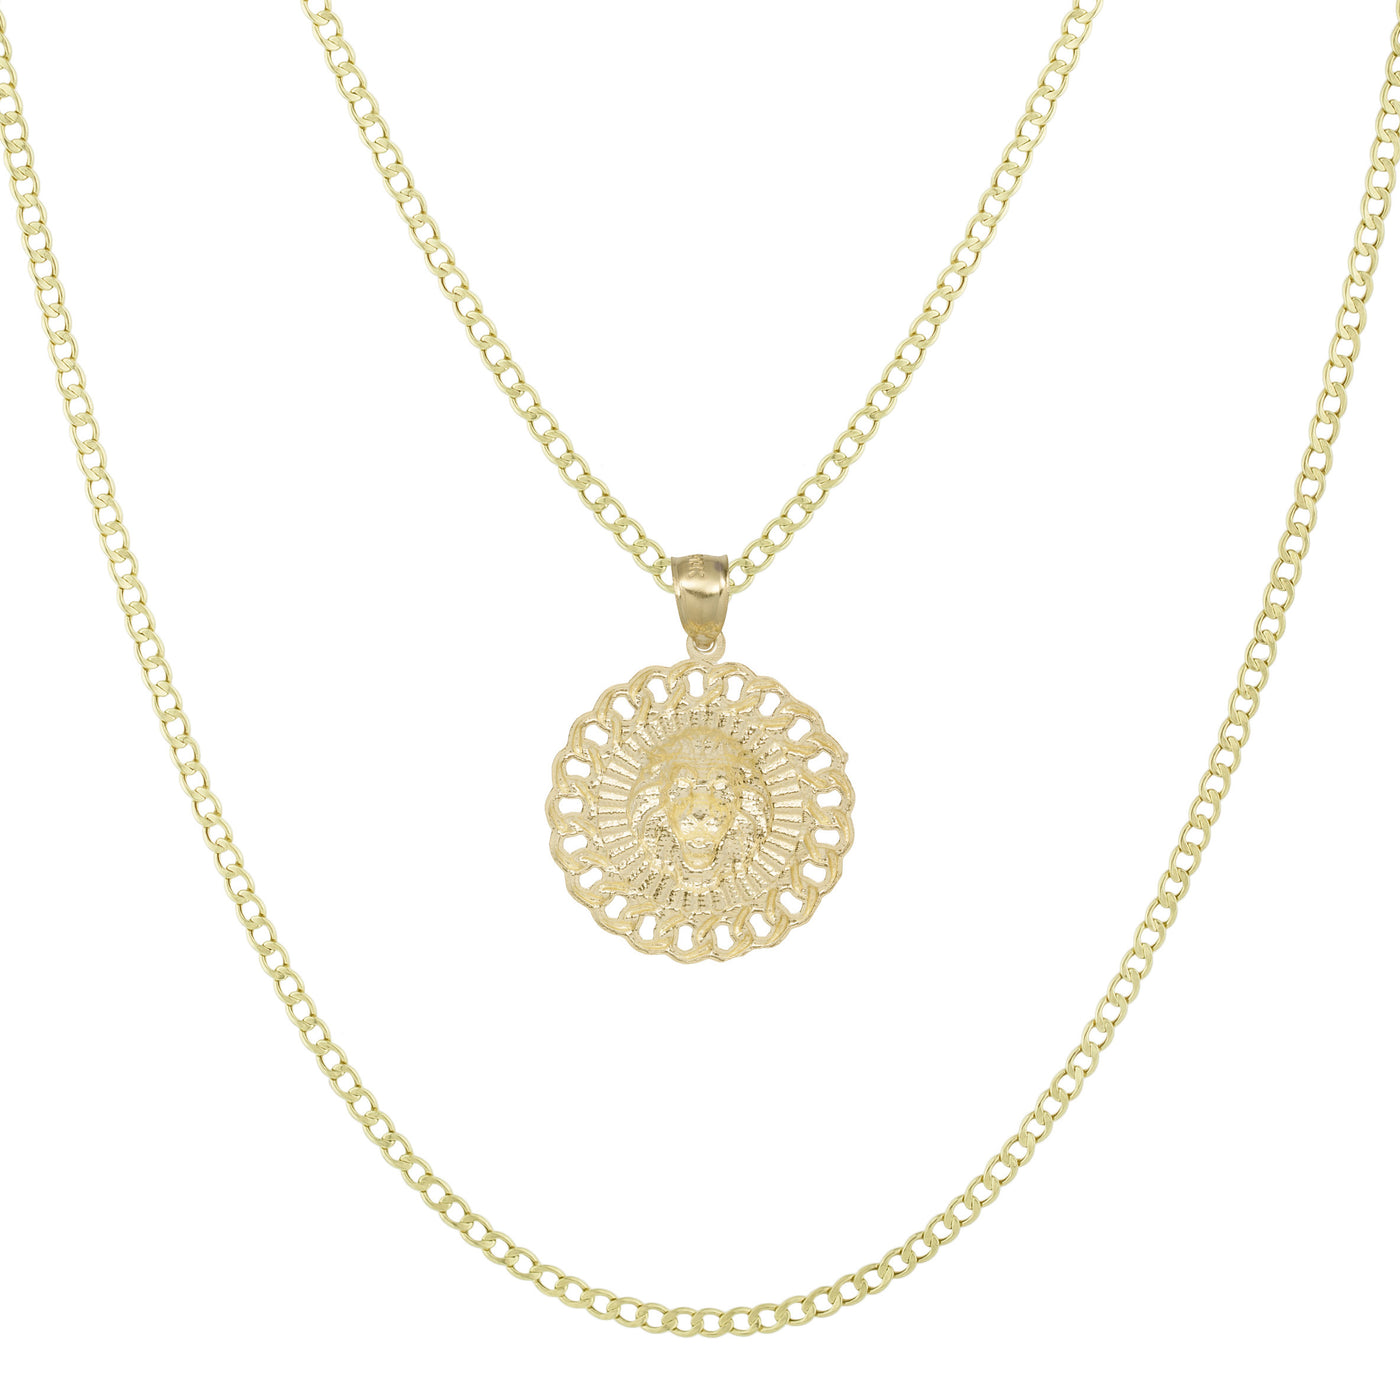 1 3/8" Lion Head Pendant & Chain Necklace Set 10K Yellow White Gold